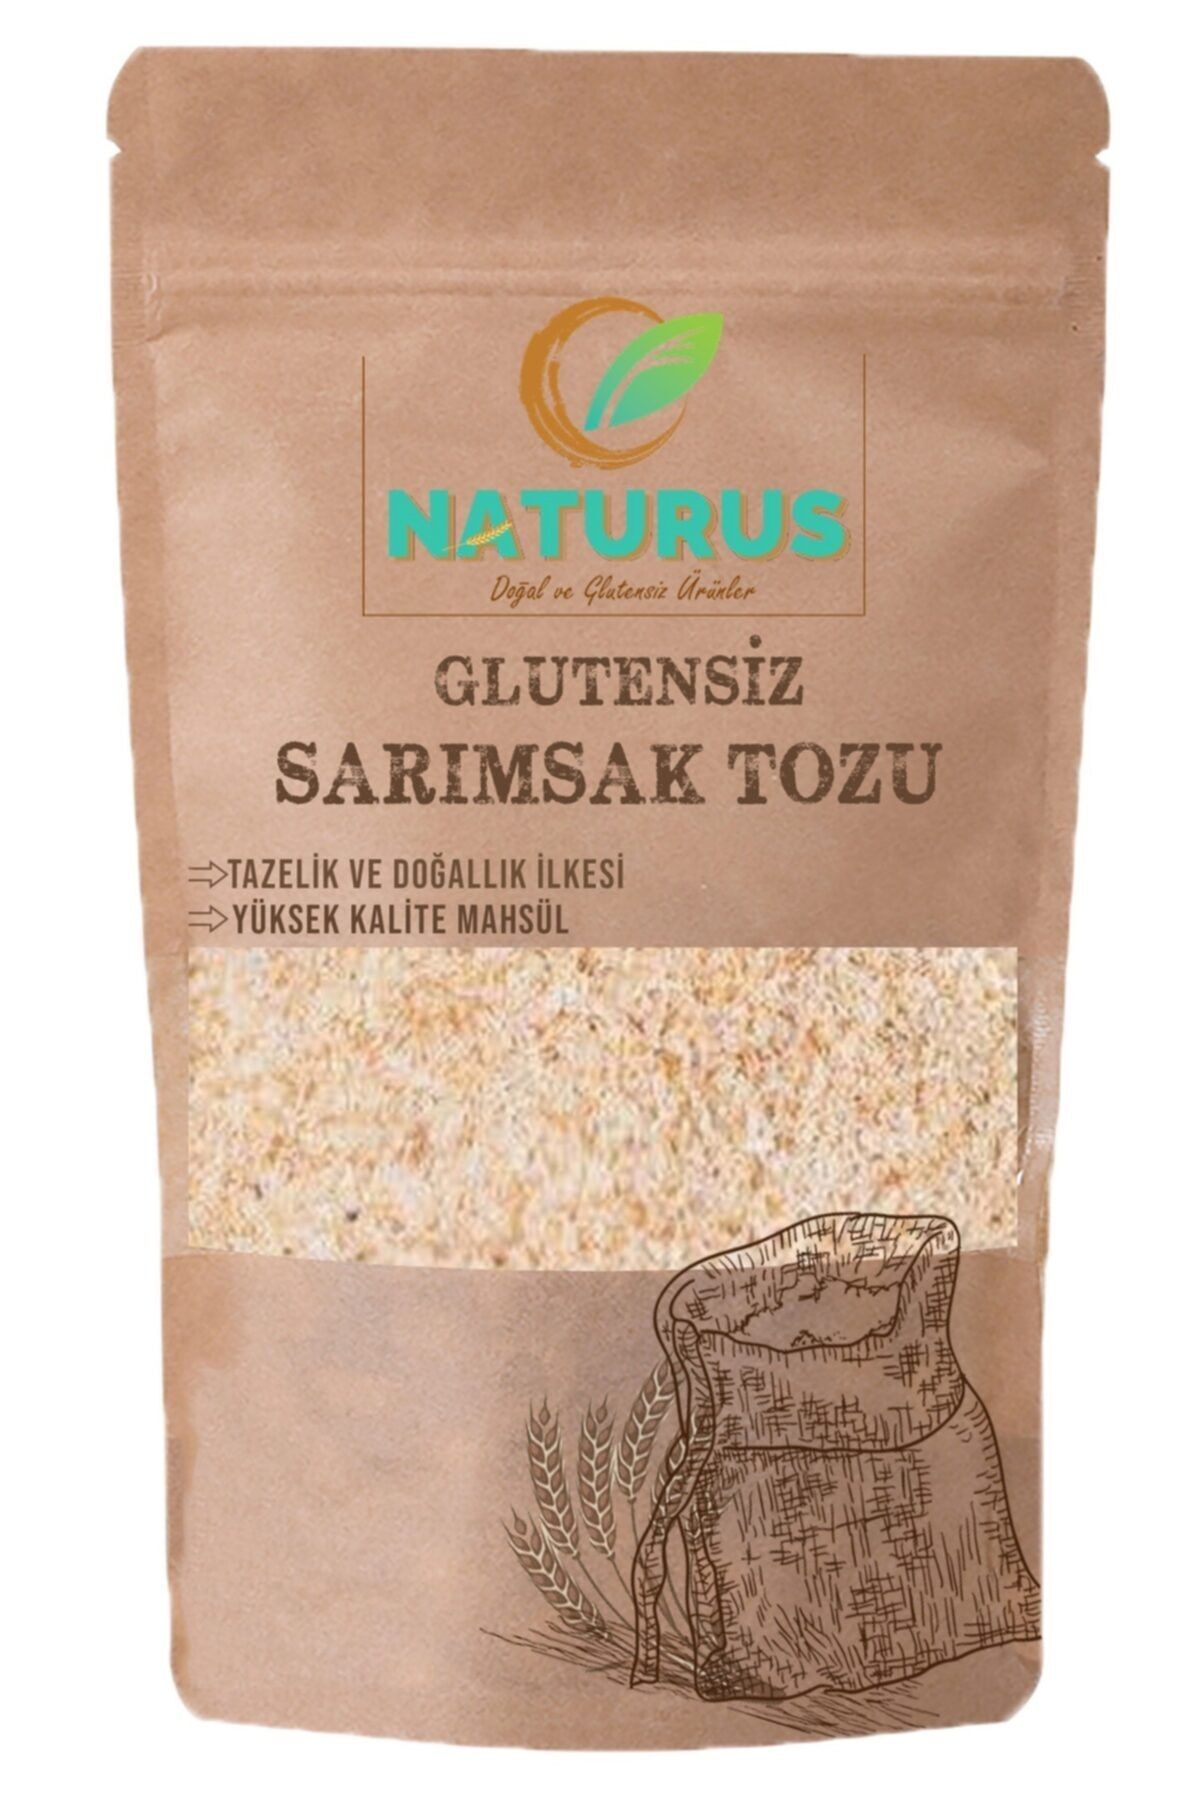 NATURUS Glutensiz Sarımsak Tozu 250 gr